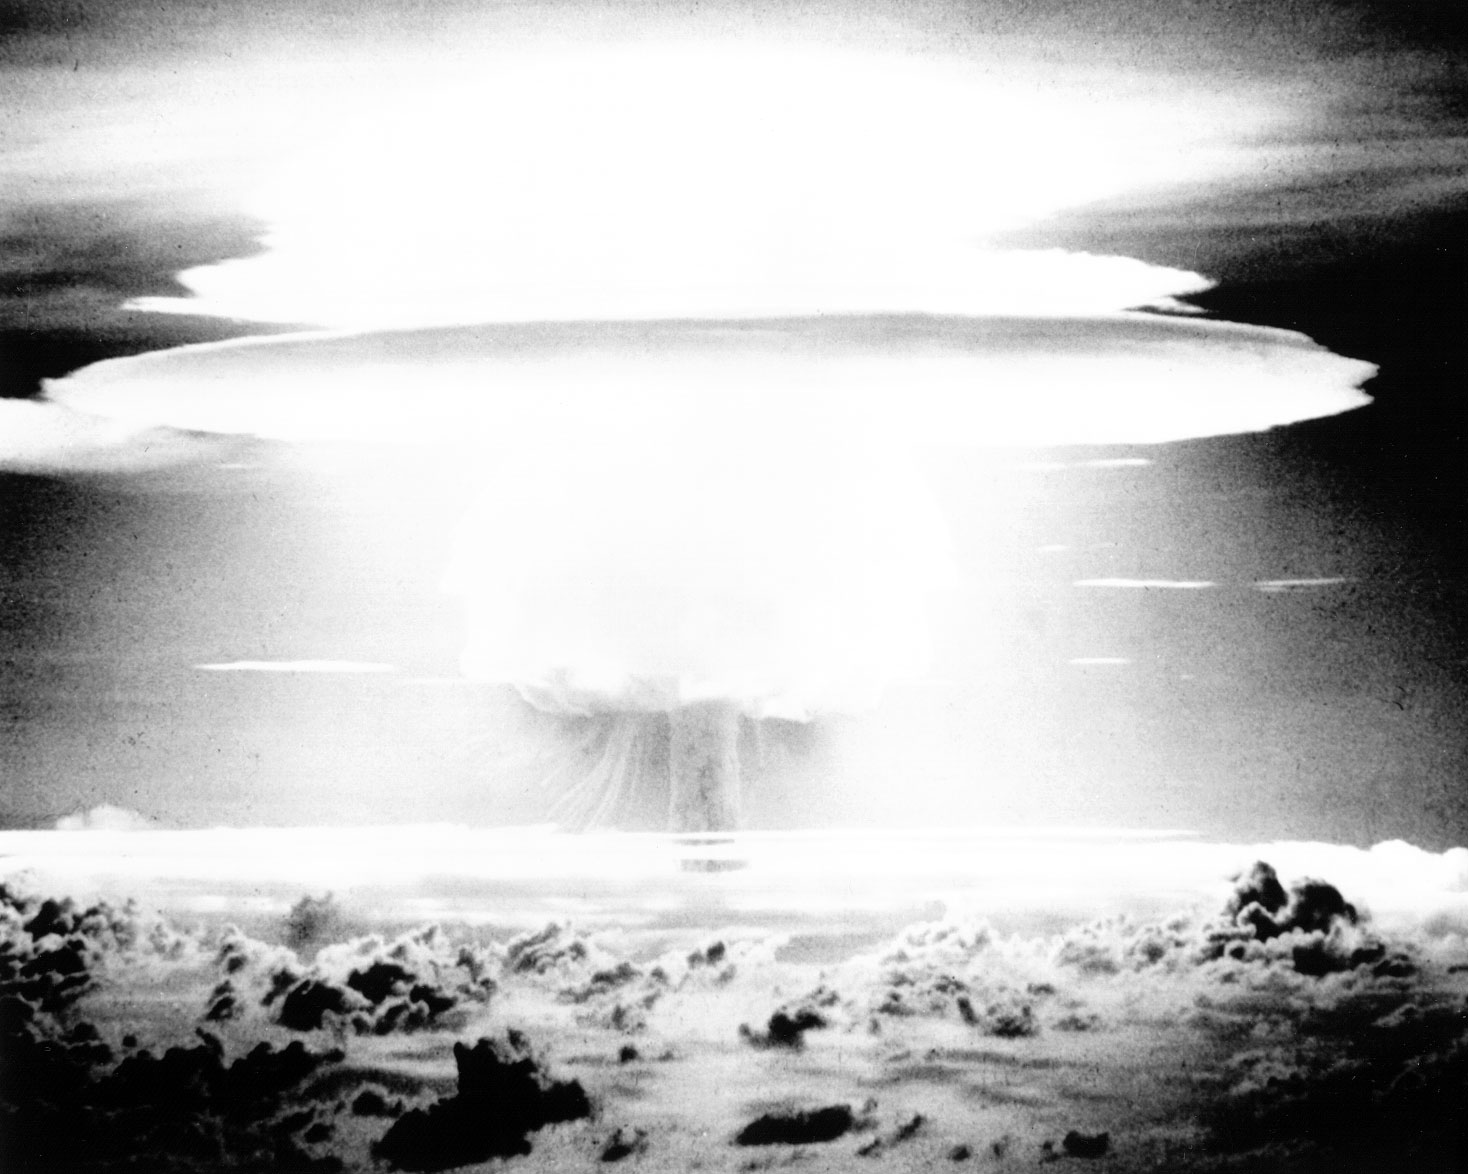 Three islands of Bikini Atoll were vapourised and islands 200 kilometres away were shooked by the 15 megaton Bravo hydrogen bomb, February 28, 1954.